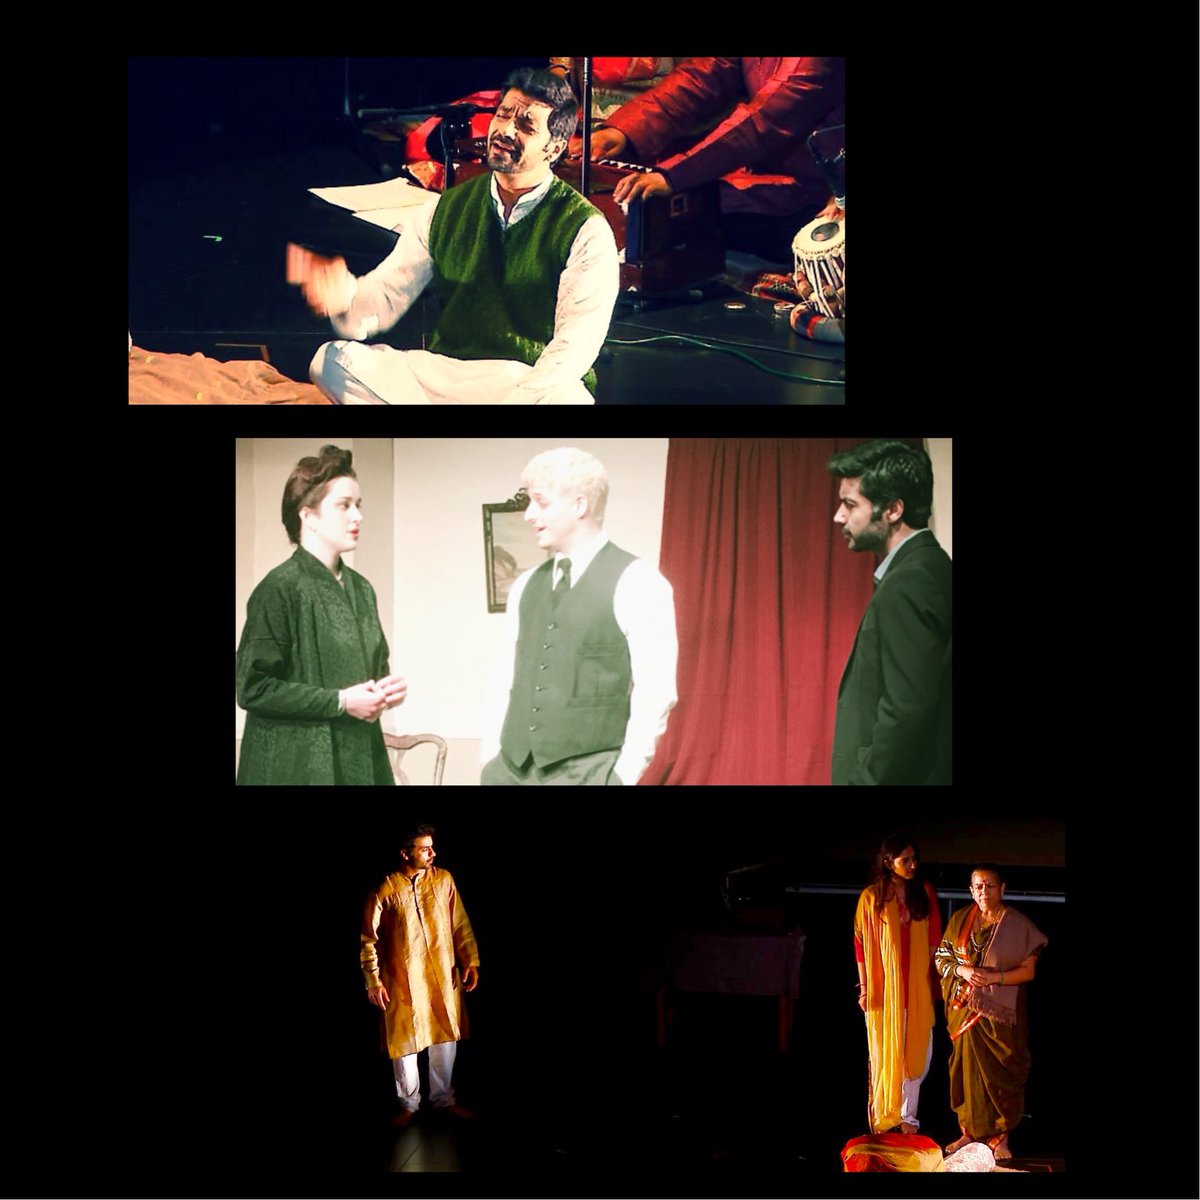 | Happy World Theatre Day |

Keep creating magic on stage..

#theatre #WorldTheatreDay2018 #stage #lovefromastranger #dakotagrey #marygeraci #themusicinmyblood #meeranarsimhan #radhikamehrotra #sandipbhattacharjee #susmitabhattacharya #characters #actorslife #nostalgic #audience